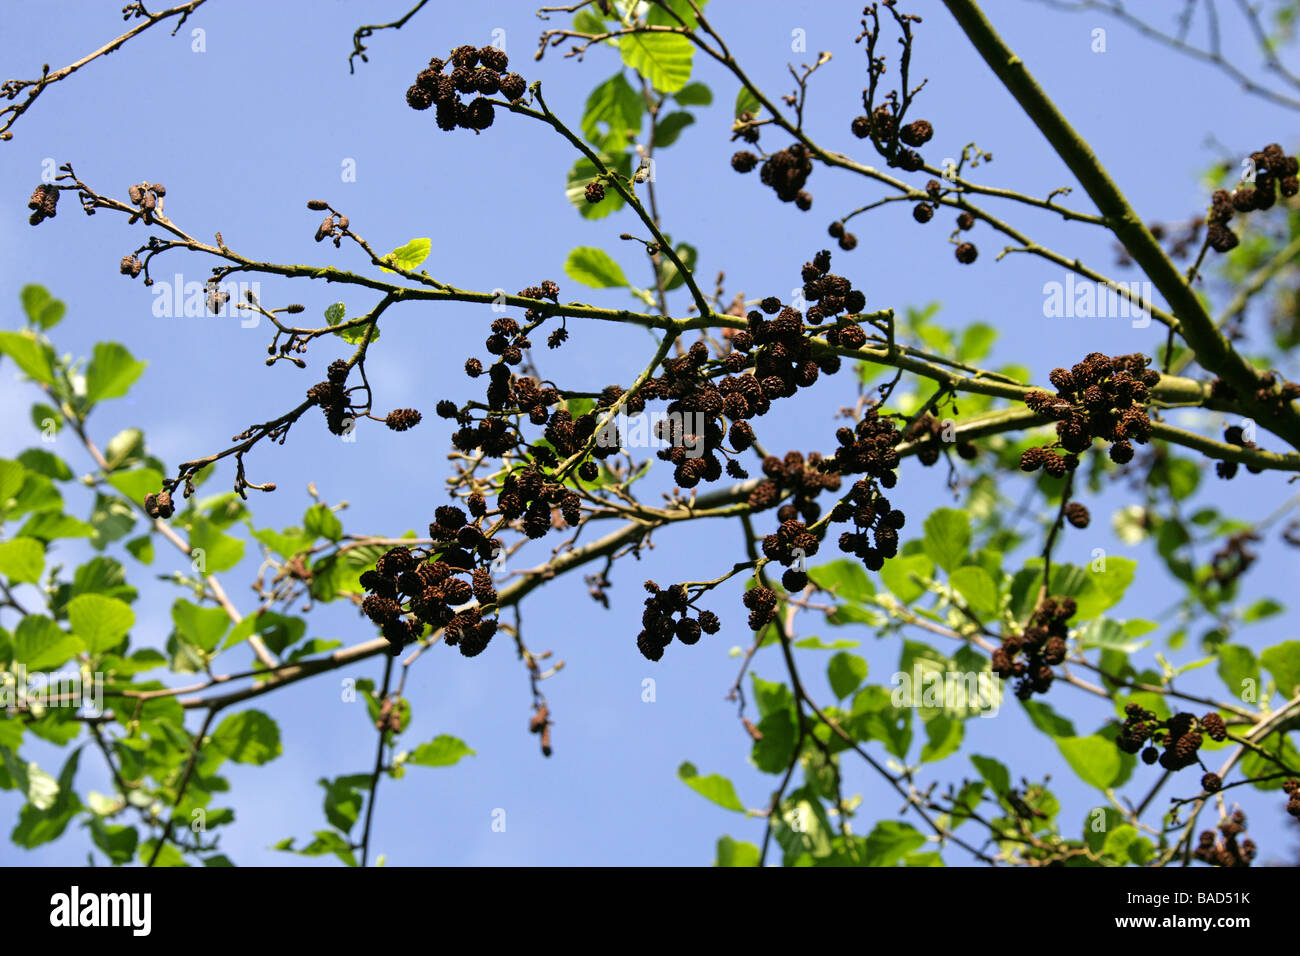 Black Alder and Catkins, Alnus glutinosa, Betulaceae. UK Stock Photo